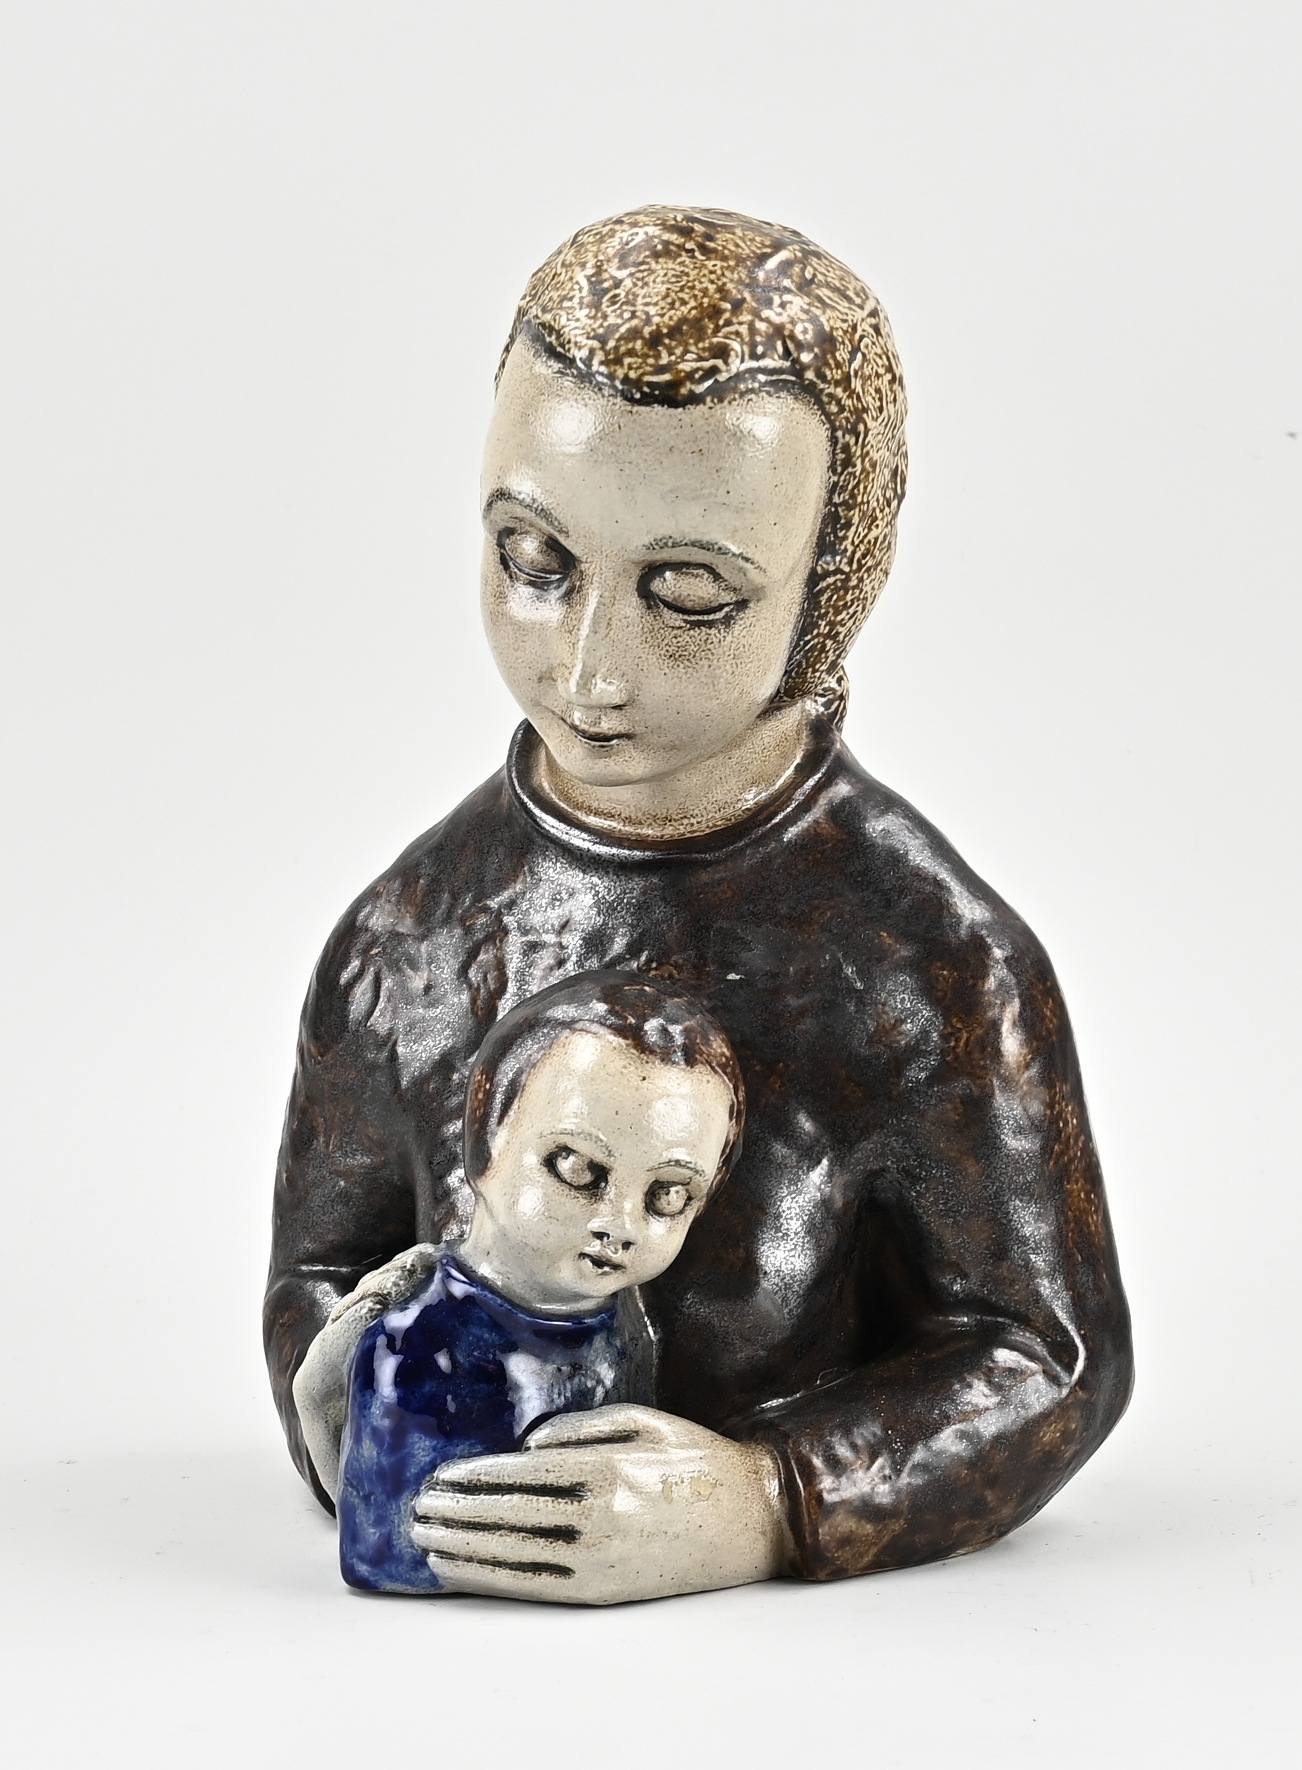 Stoneware figure by Elfriede Balzar Kopp, H 28.5 cm.